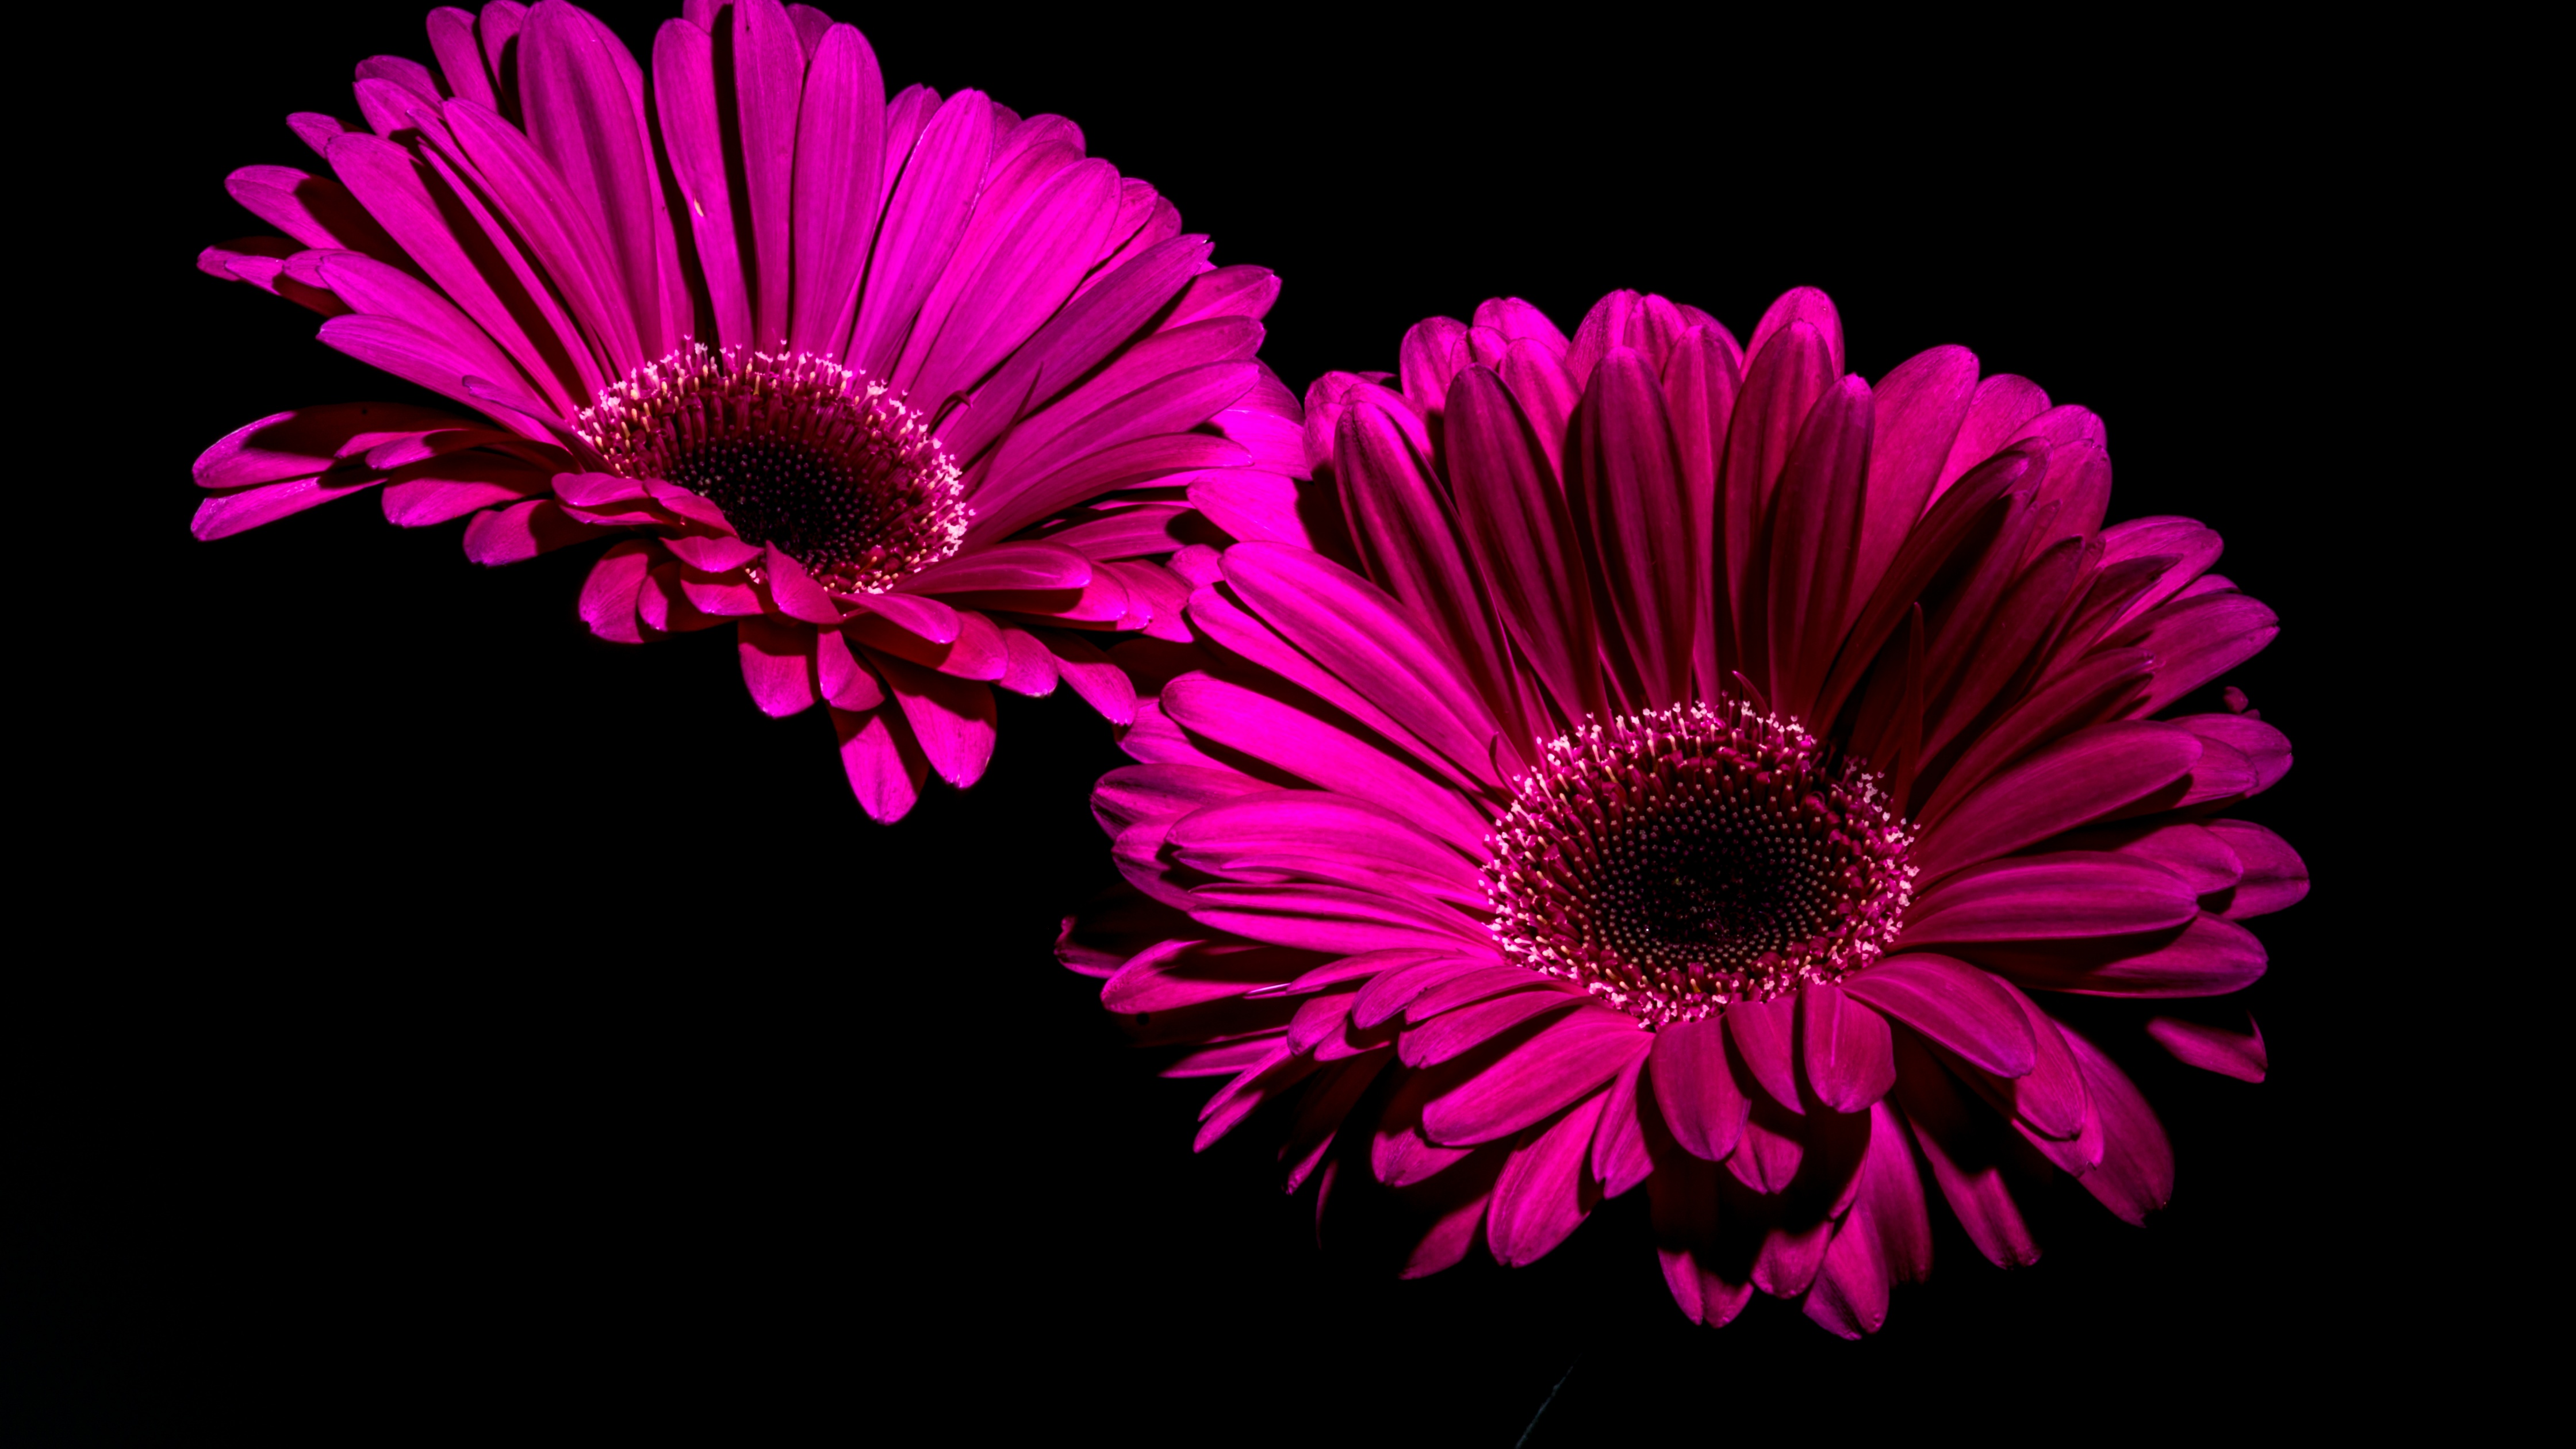 Gerbera Daisy Wallpaper 4K, Purple Flowers, Black background, Macro, Closeup, Flowers